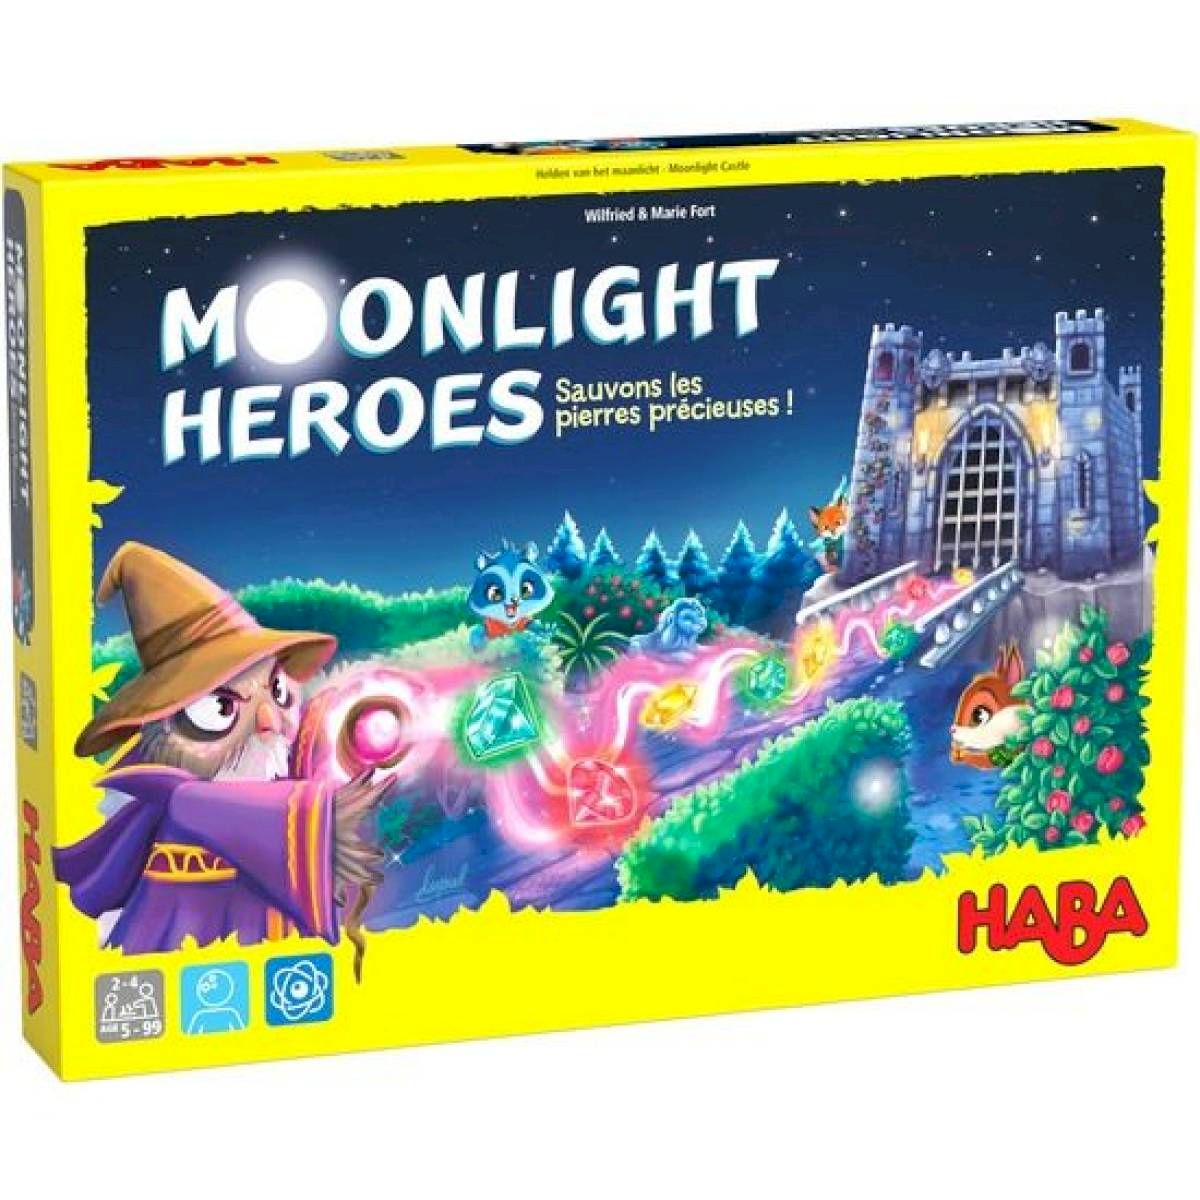 Moonlight Heroes - Haba